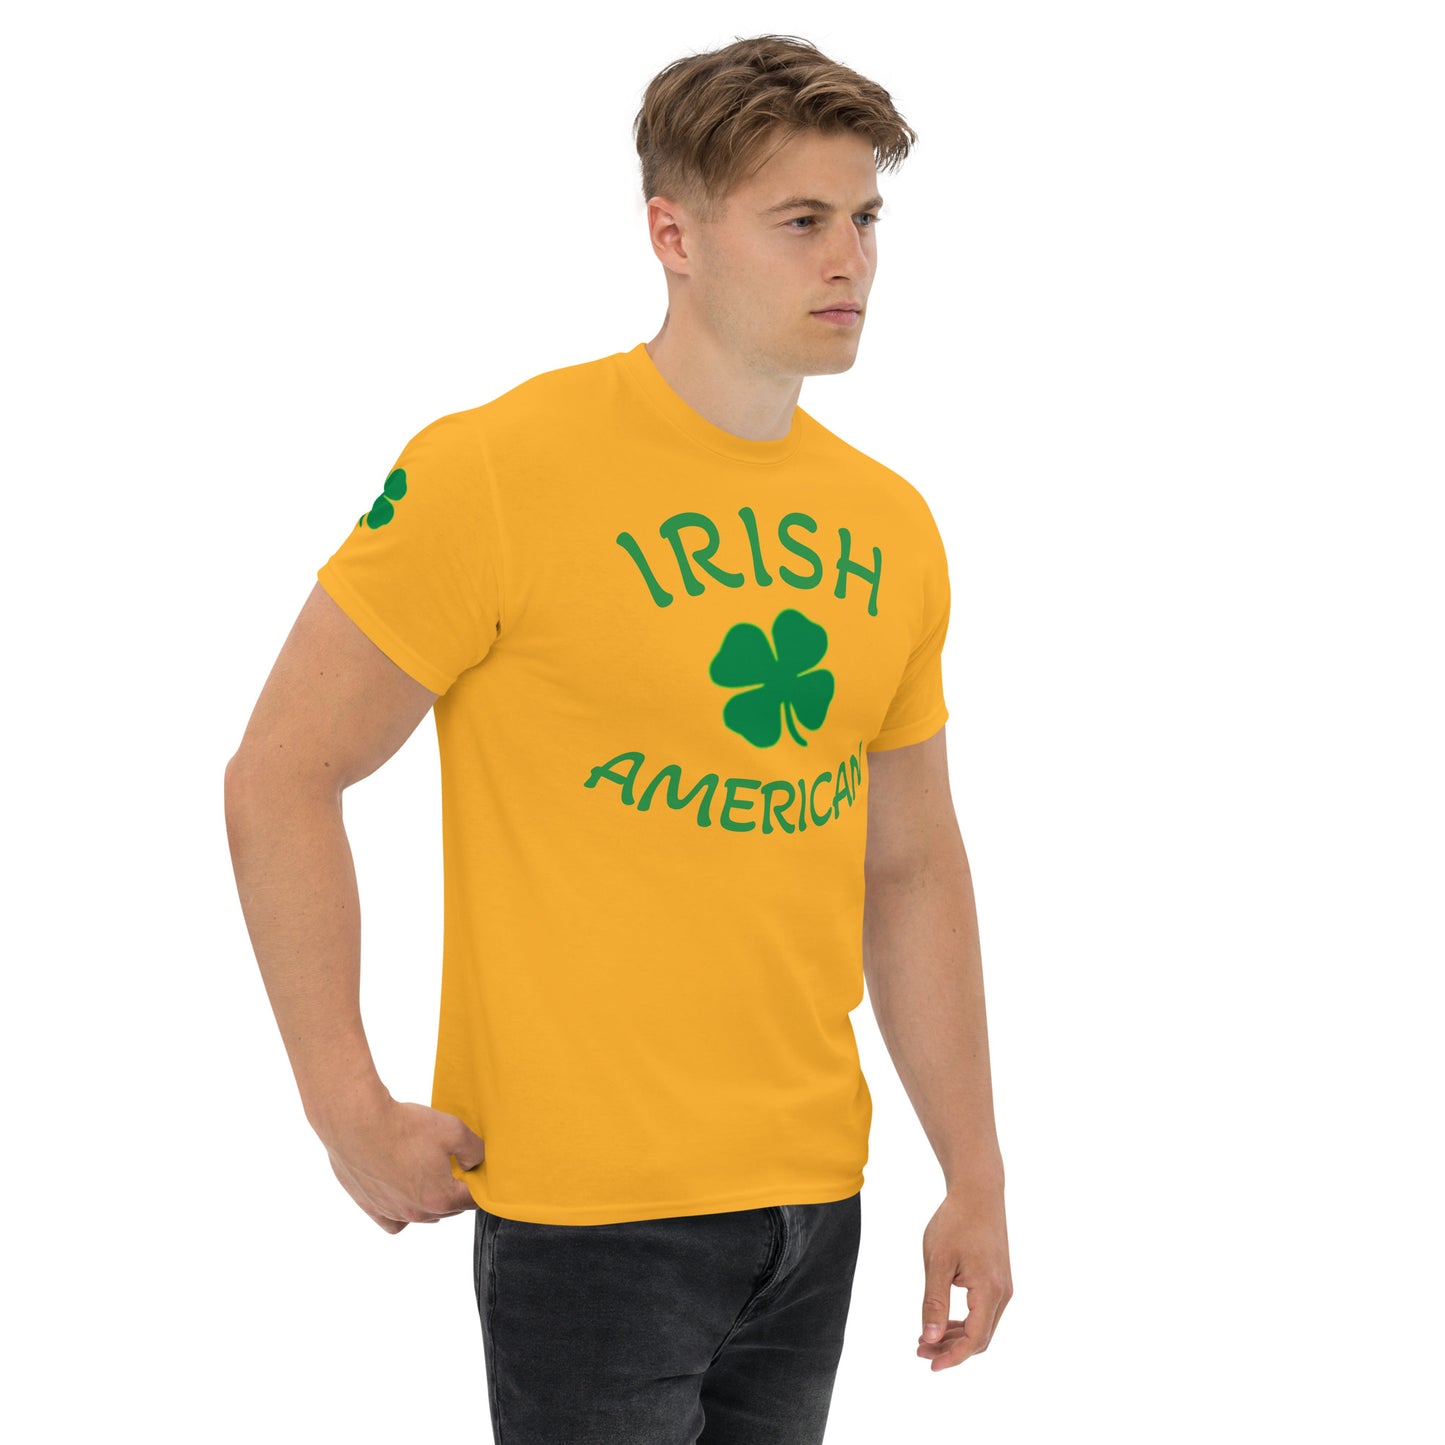 Irish American classic tee